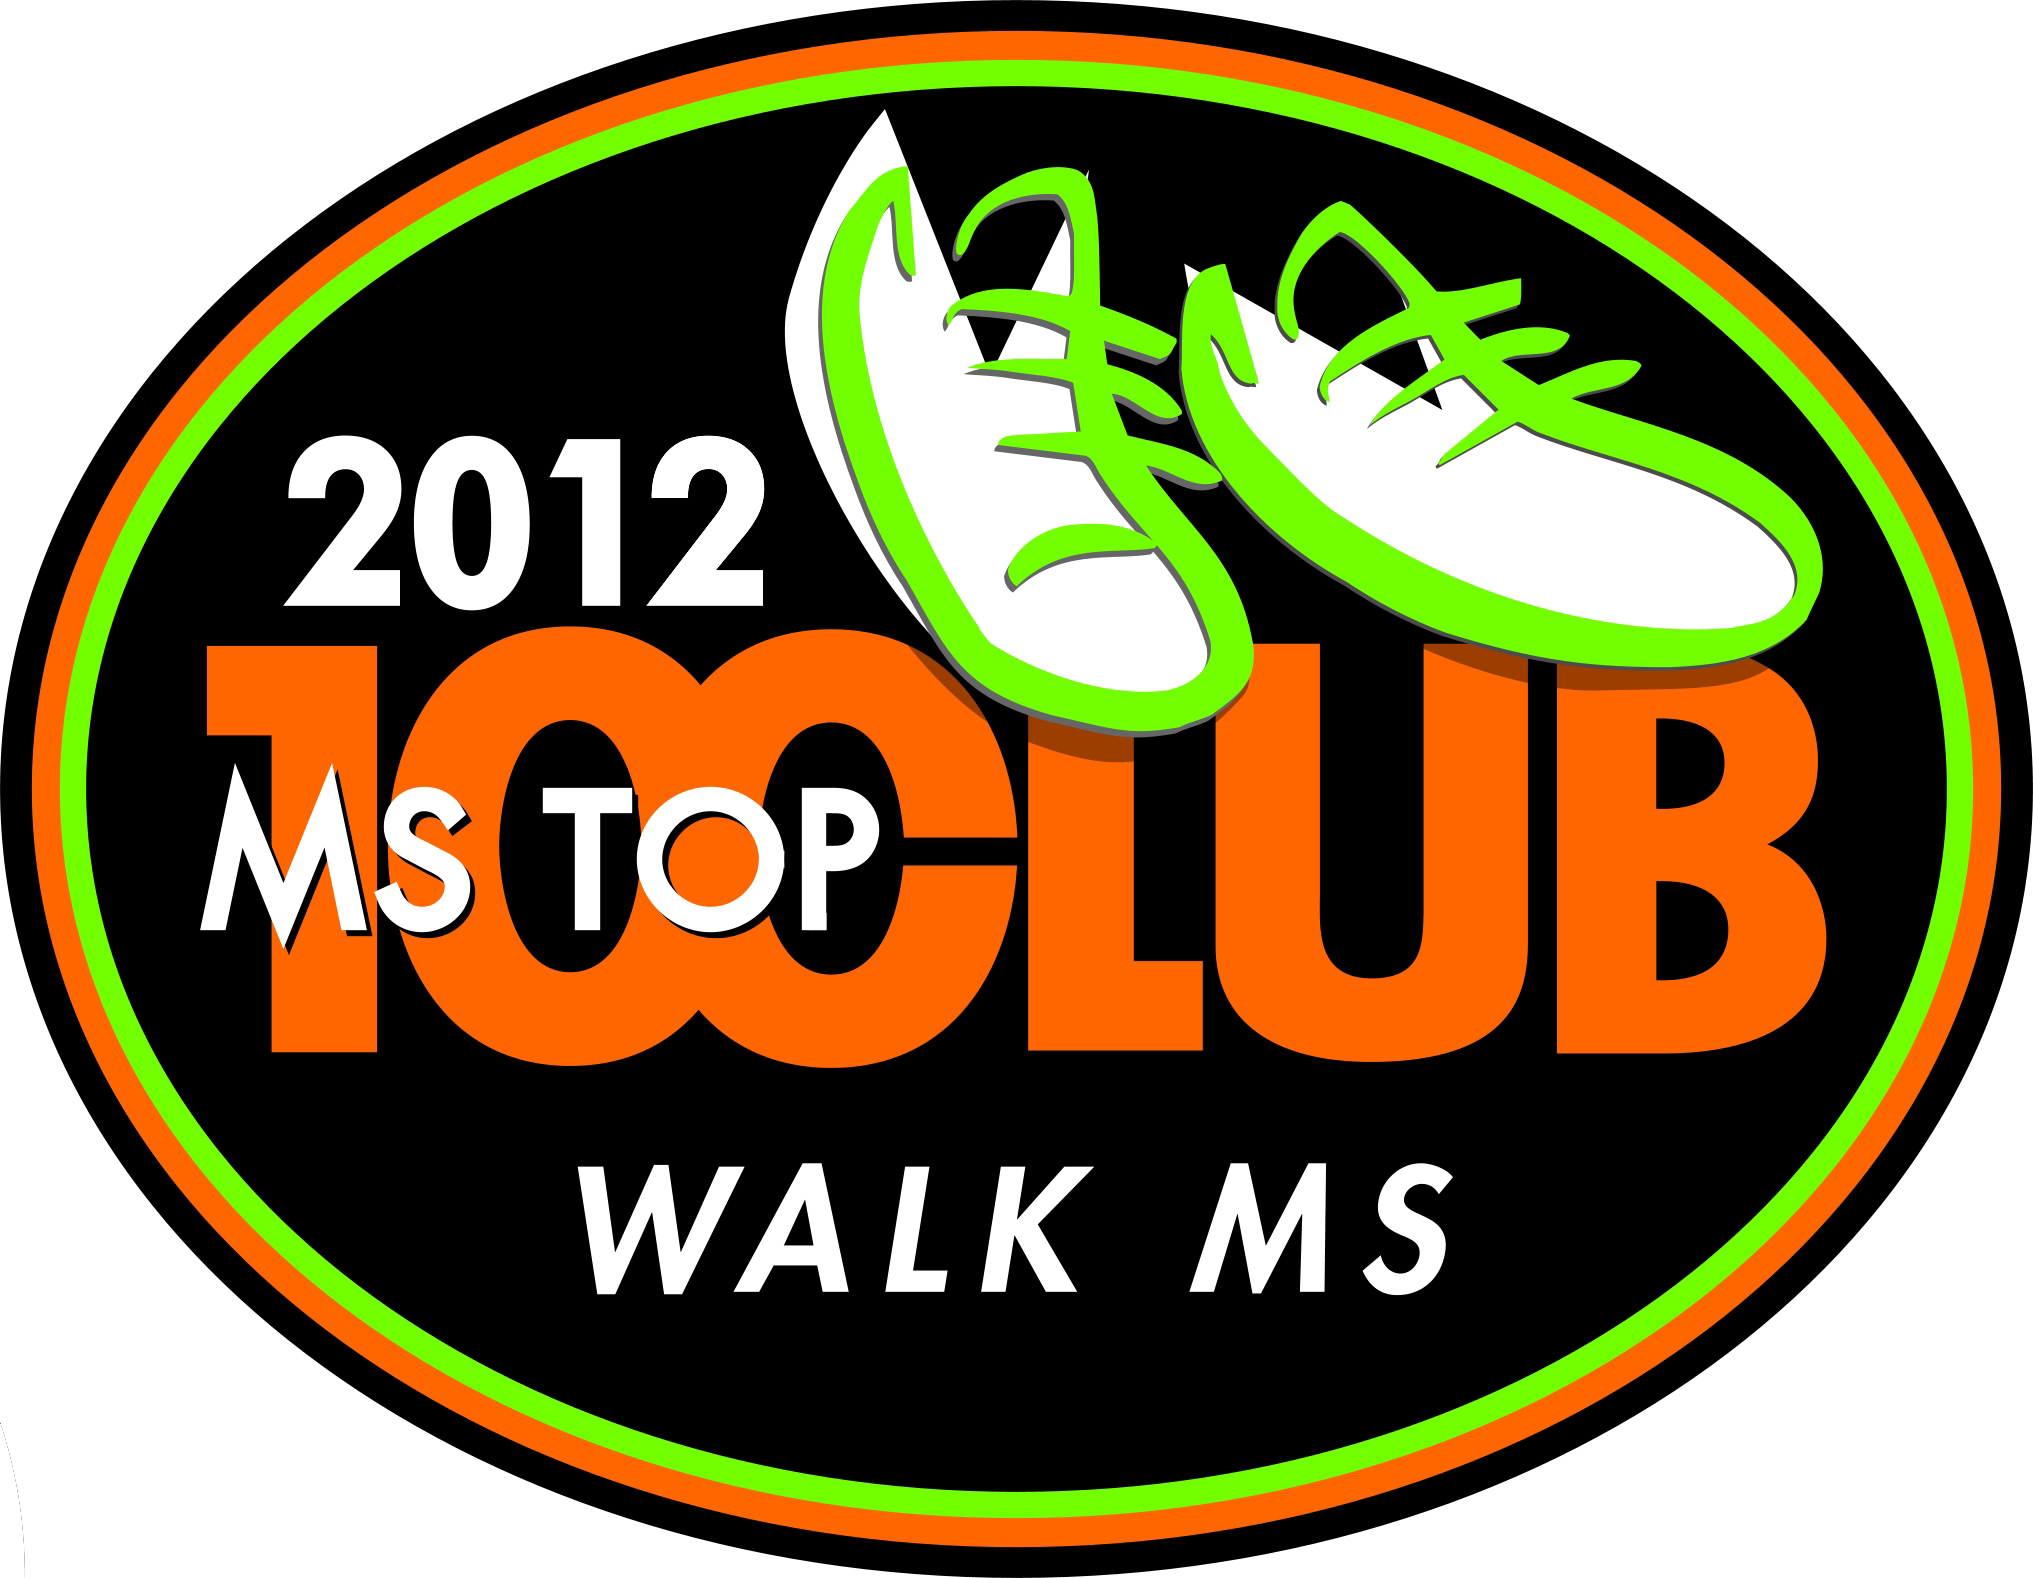 GAA WAlk MS Top 100 Club 2012